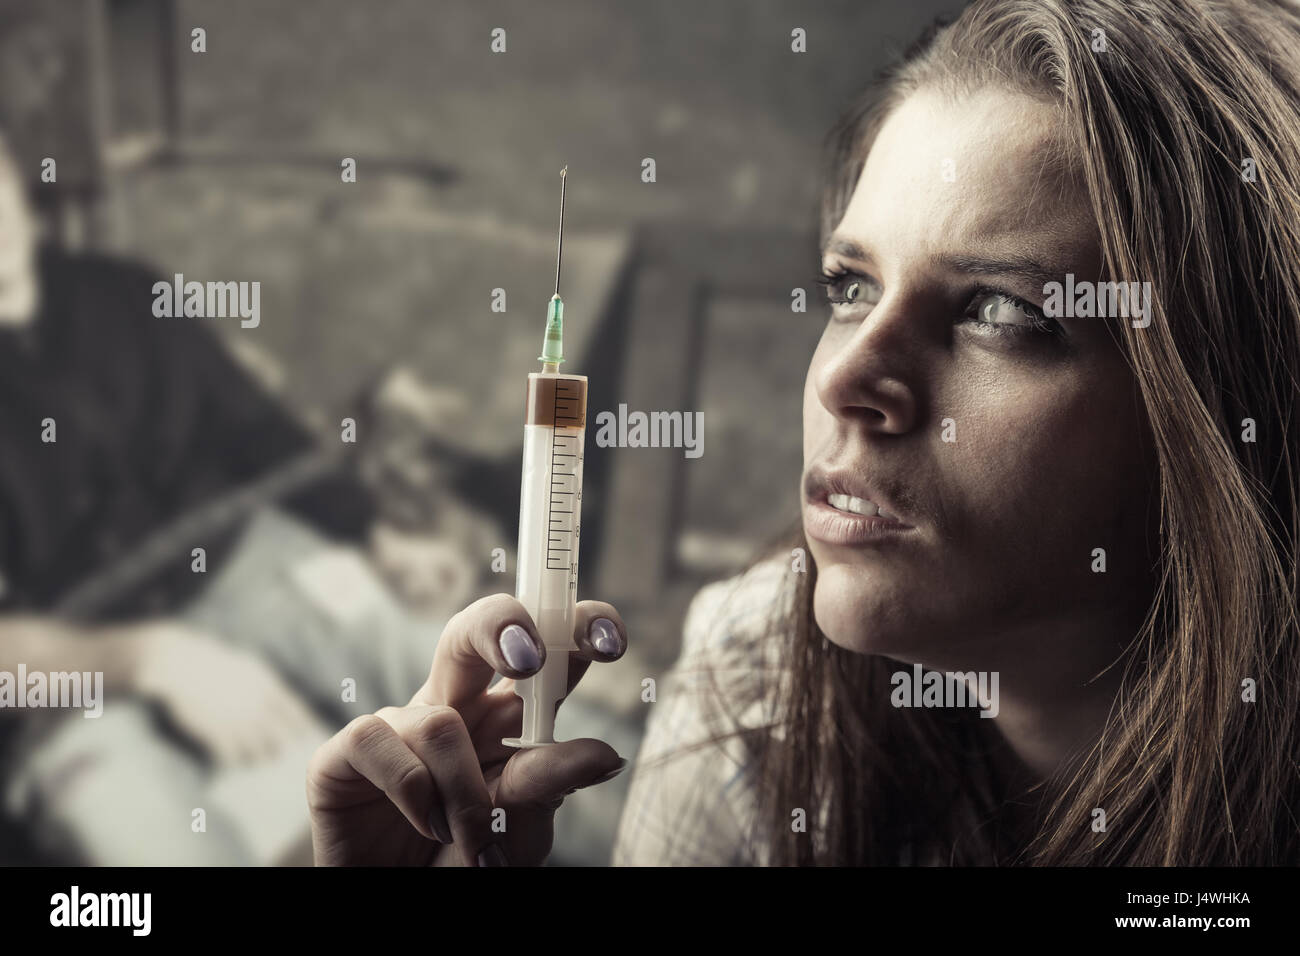 Drug addiction. Young woman with drug addiction Stock Photo